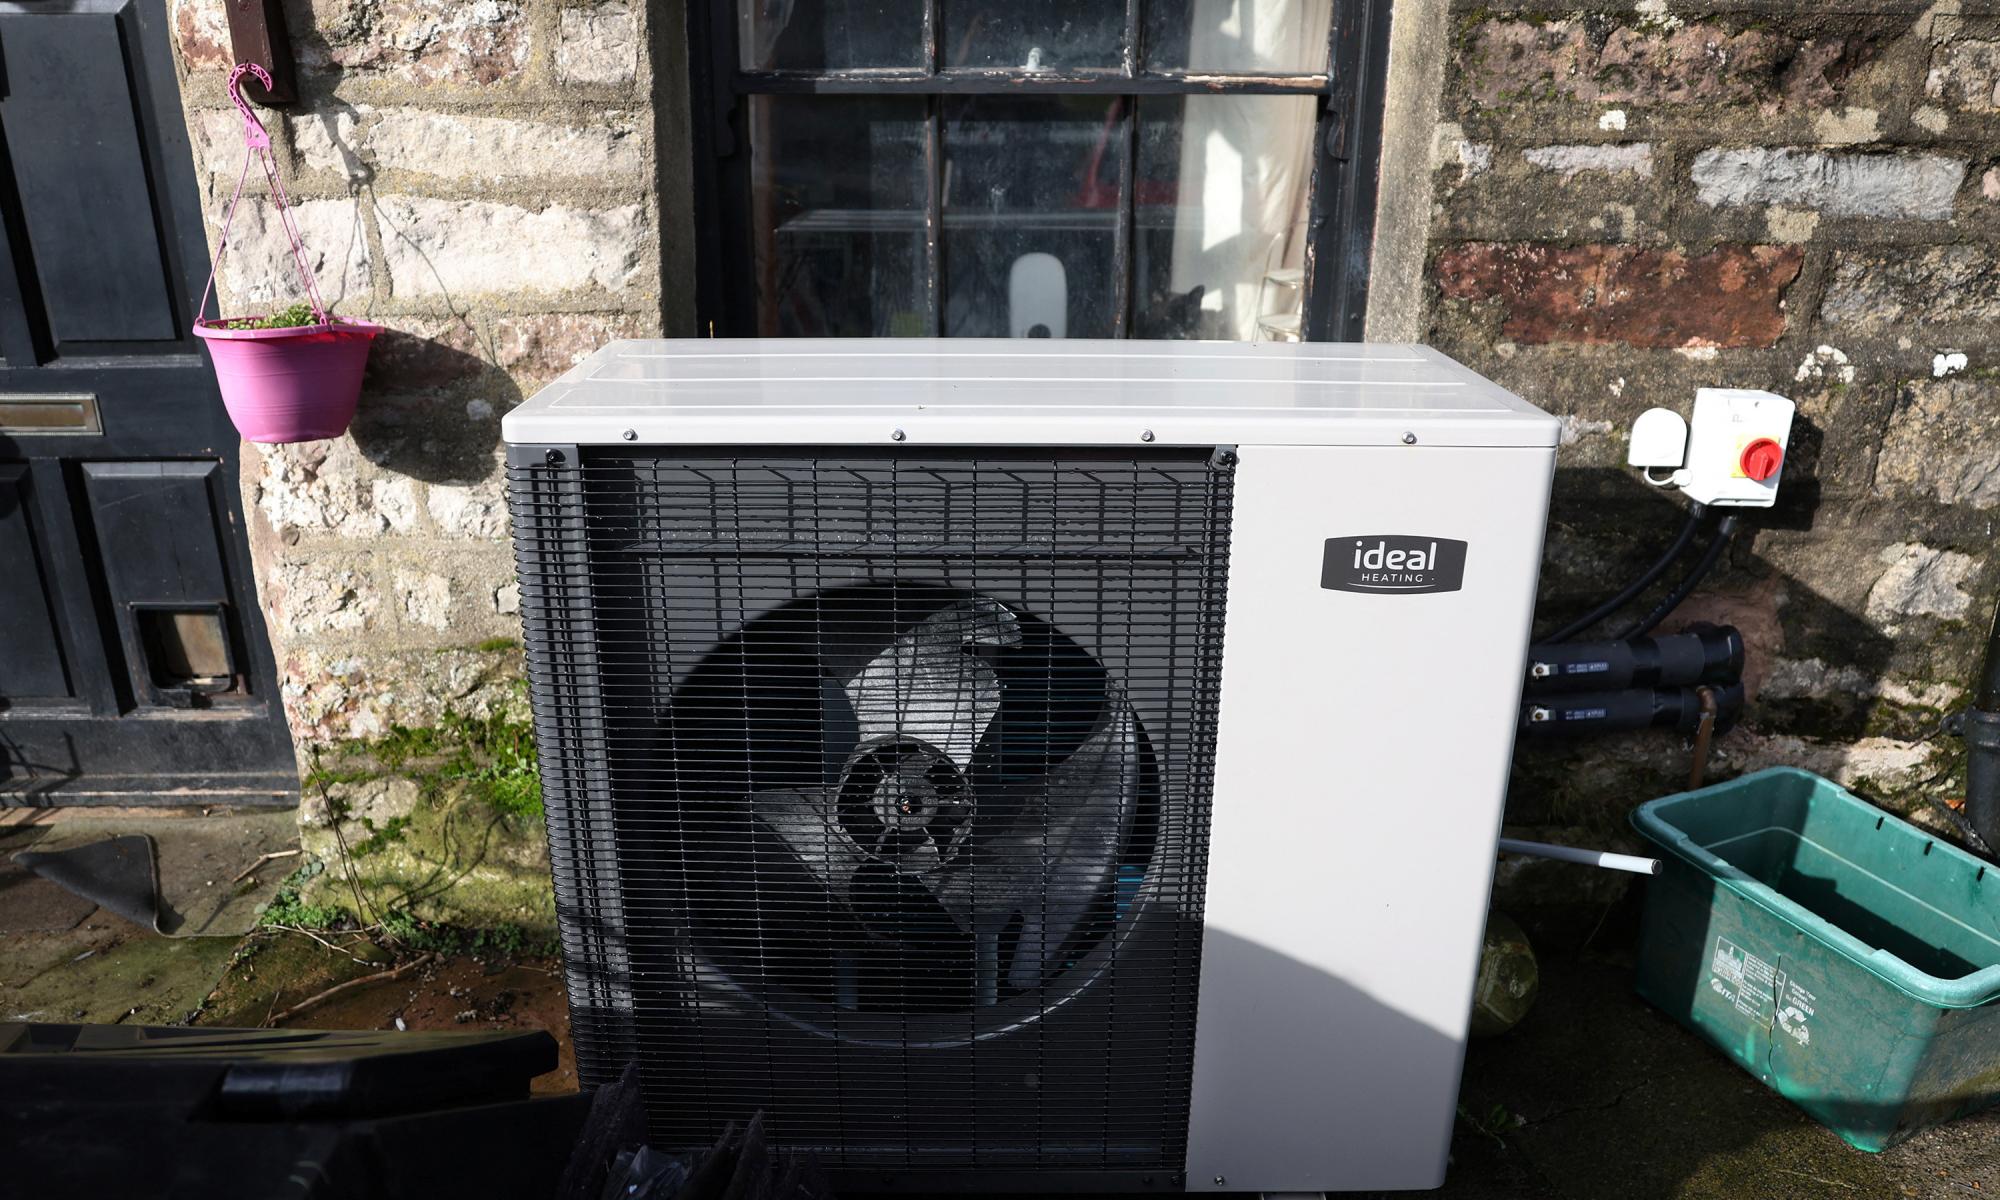 environmentally friendly heat pumps hit slump in europe, says lobby group